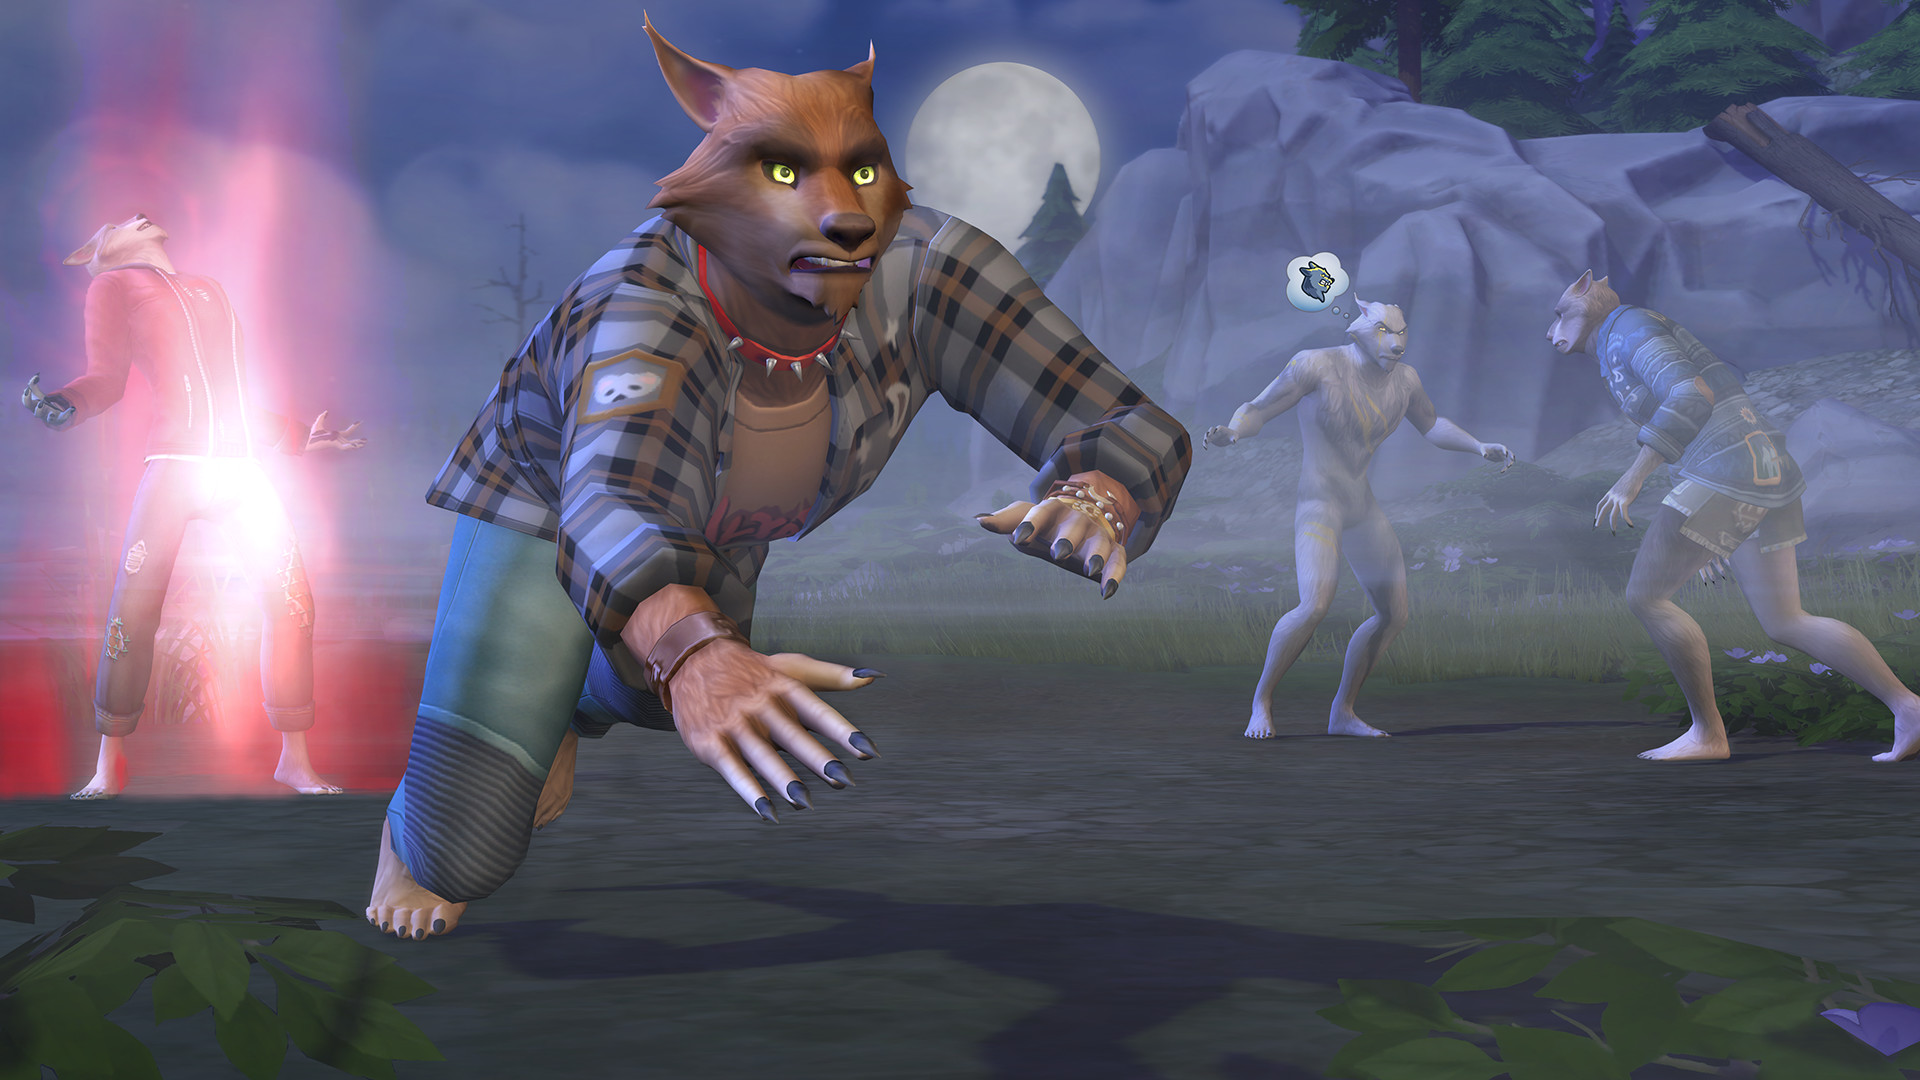 [$ 25.82] The Sims 4 - Werewolves Game Pack DLC EU v2 Steam Altergift